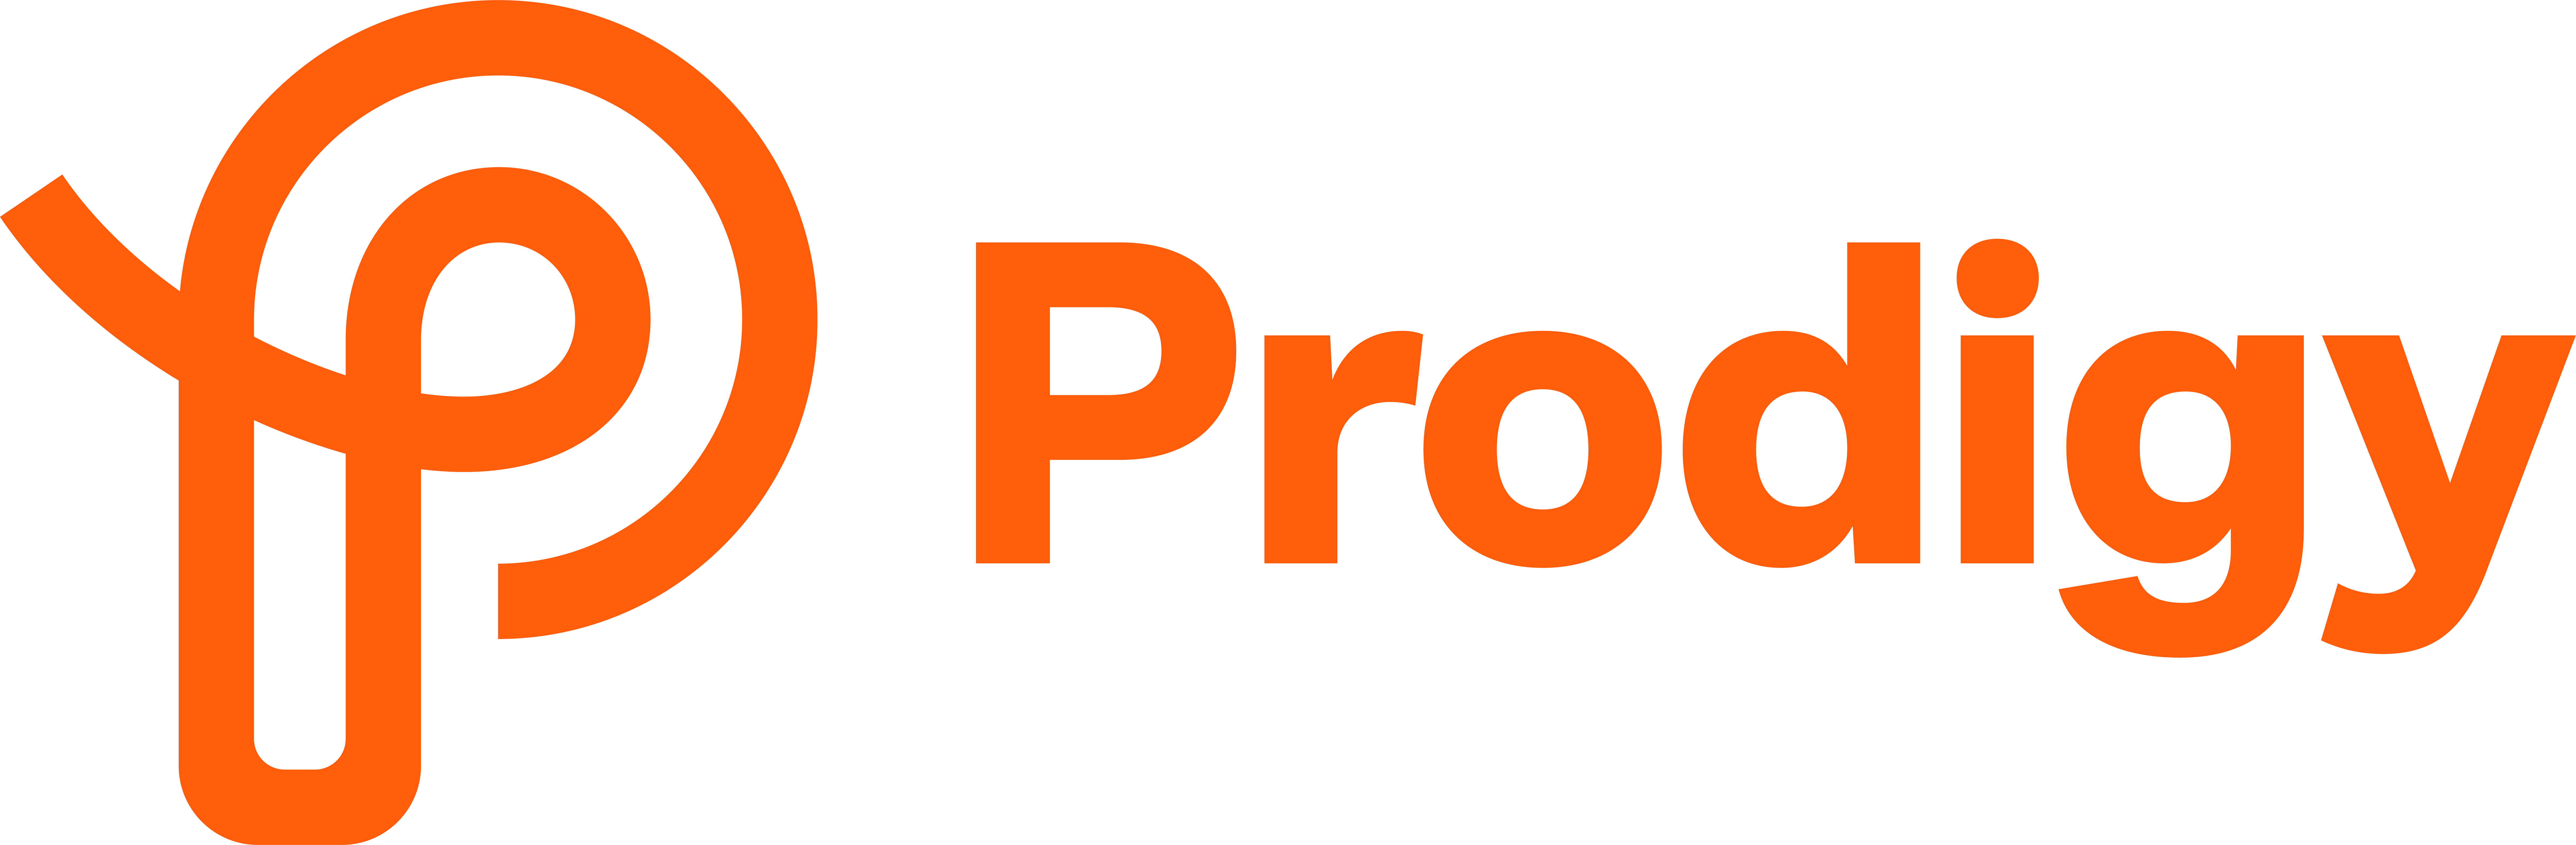 Prodigy Education company logo